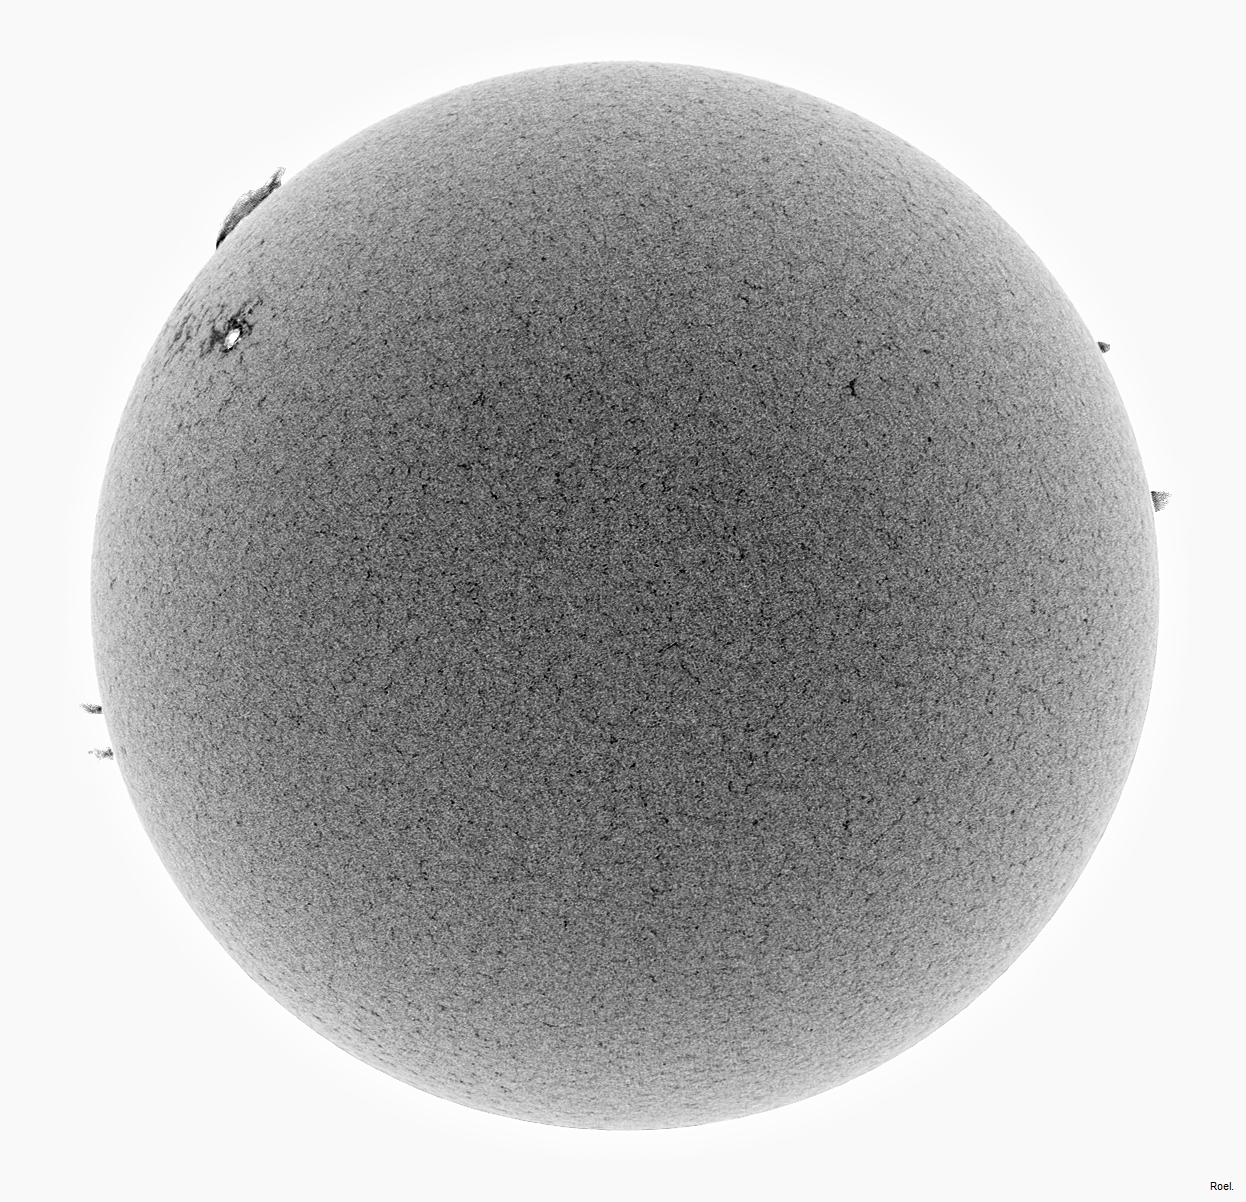 Sol del 5 de mayo del 2019-Meade -CaK-PSTmod-1neg.jpg